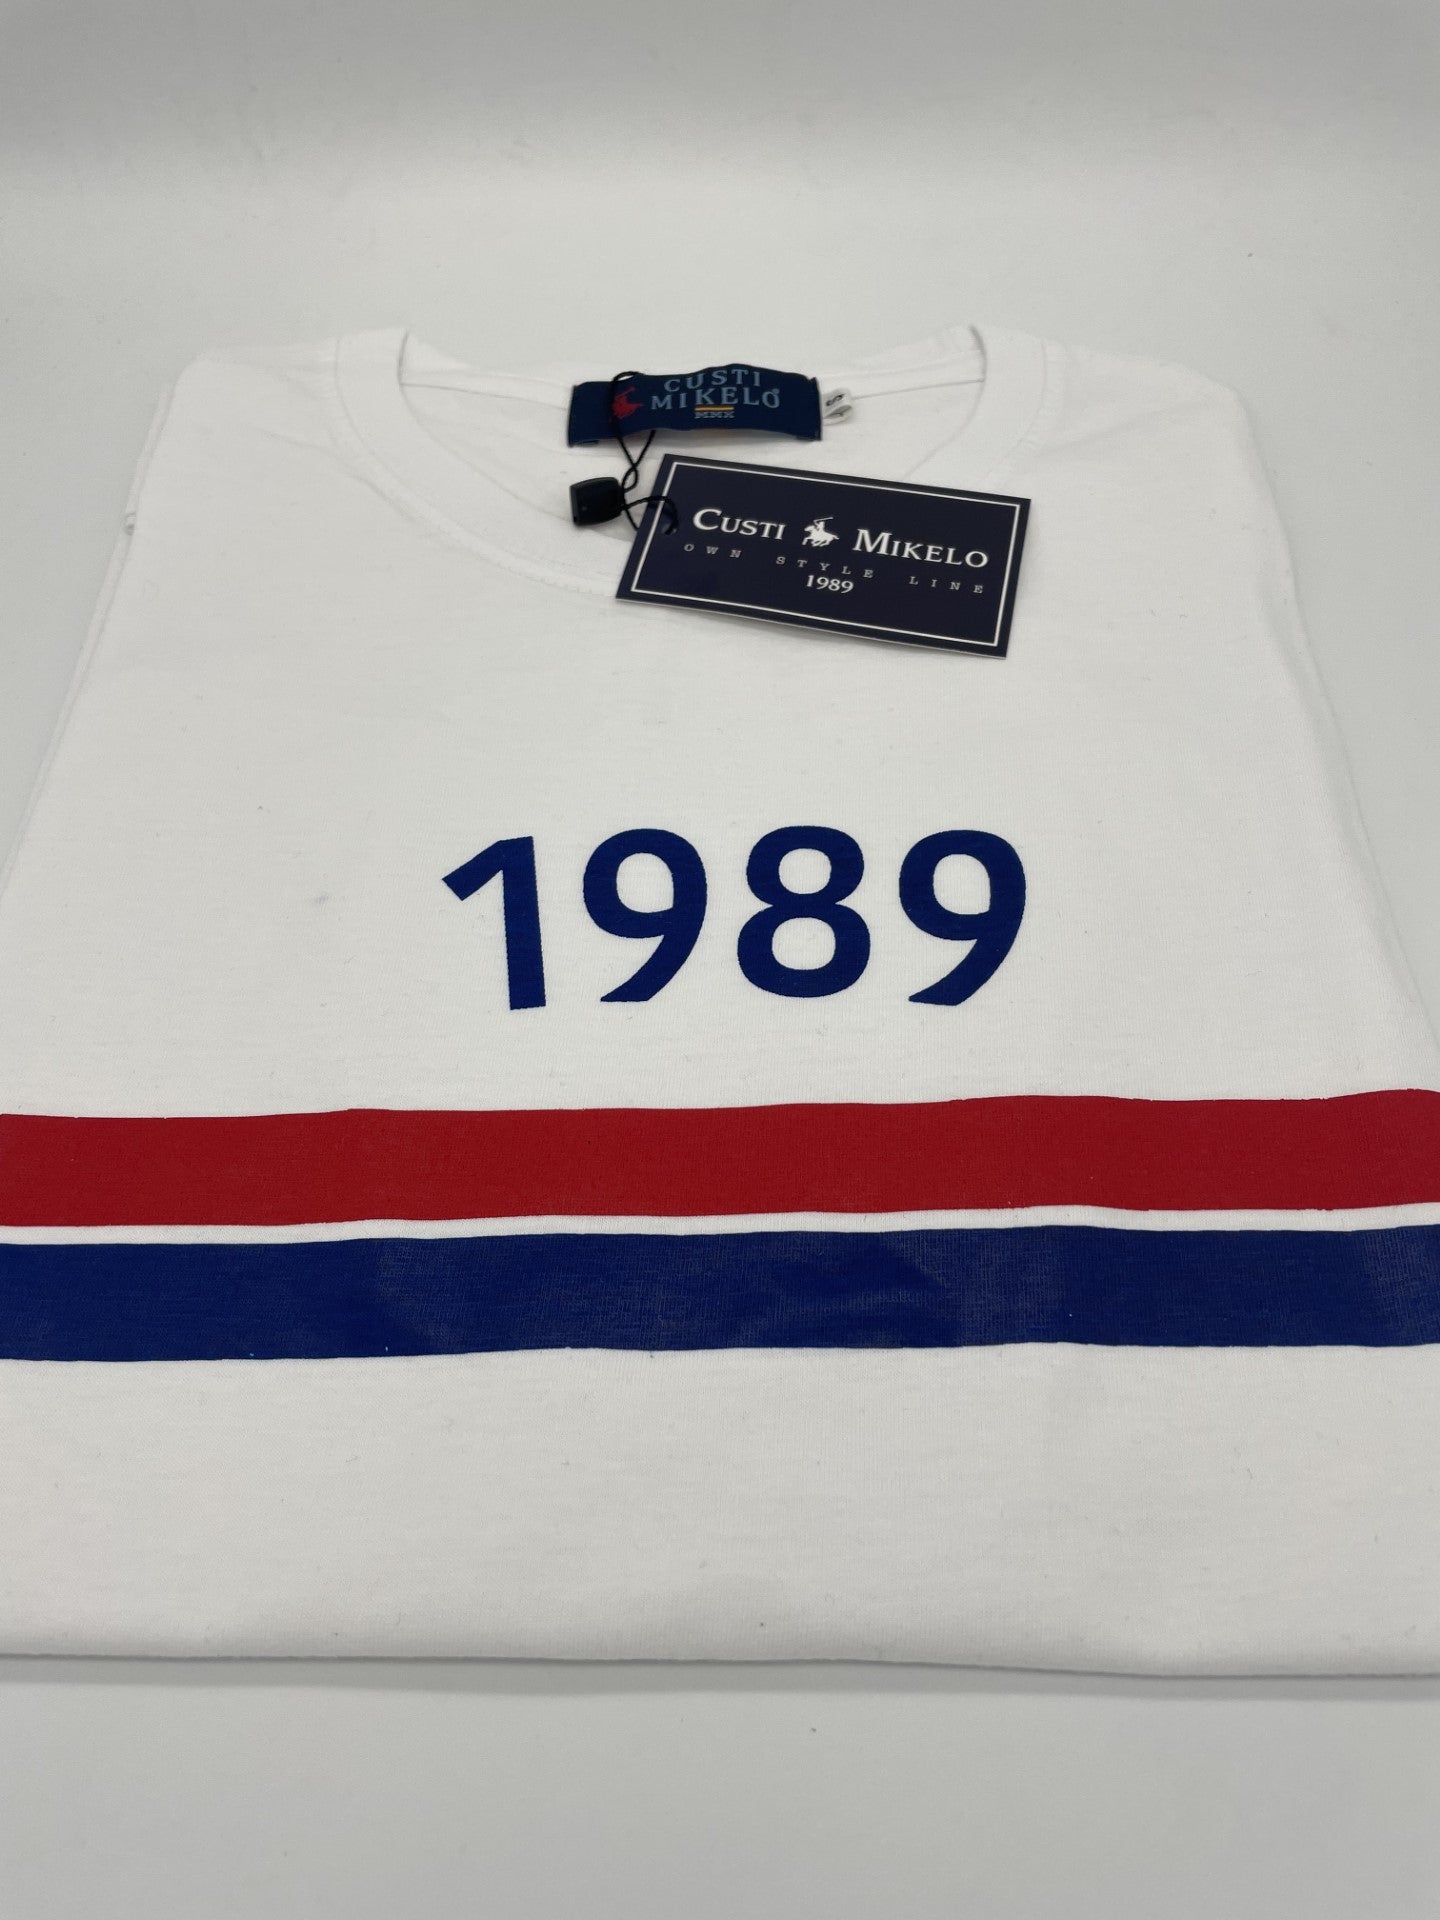 Camiseta 1989 Blanco